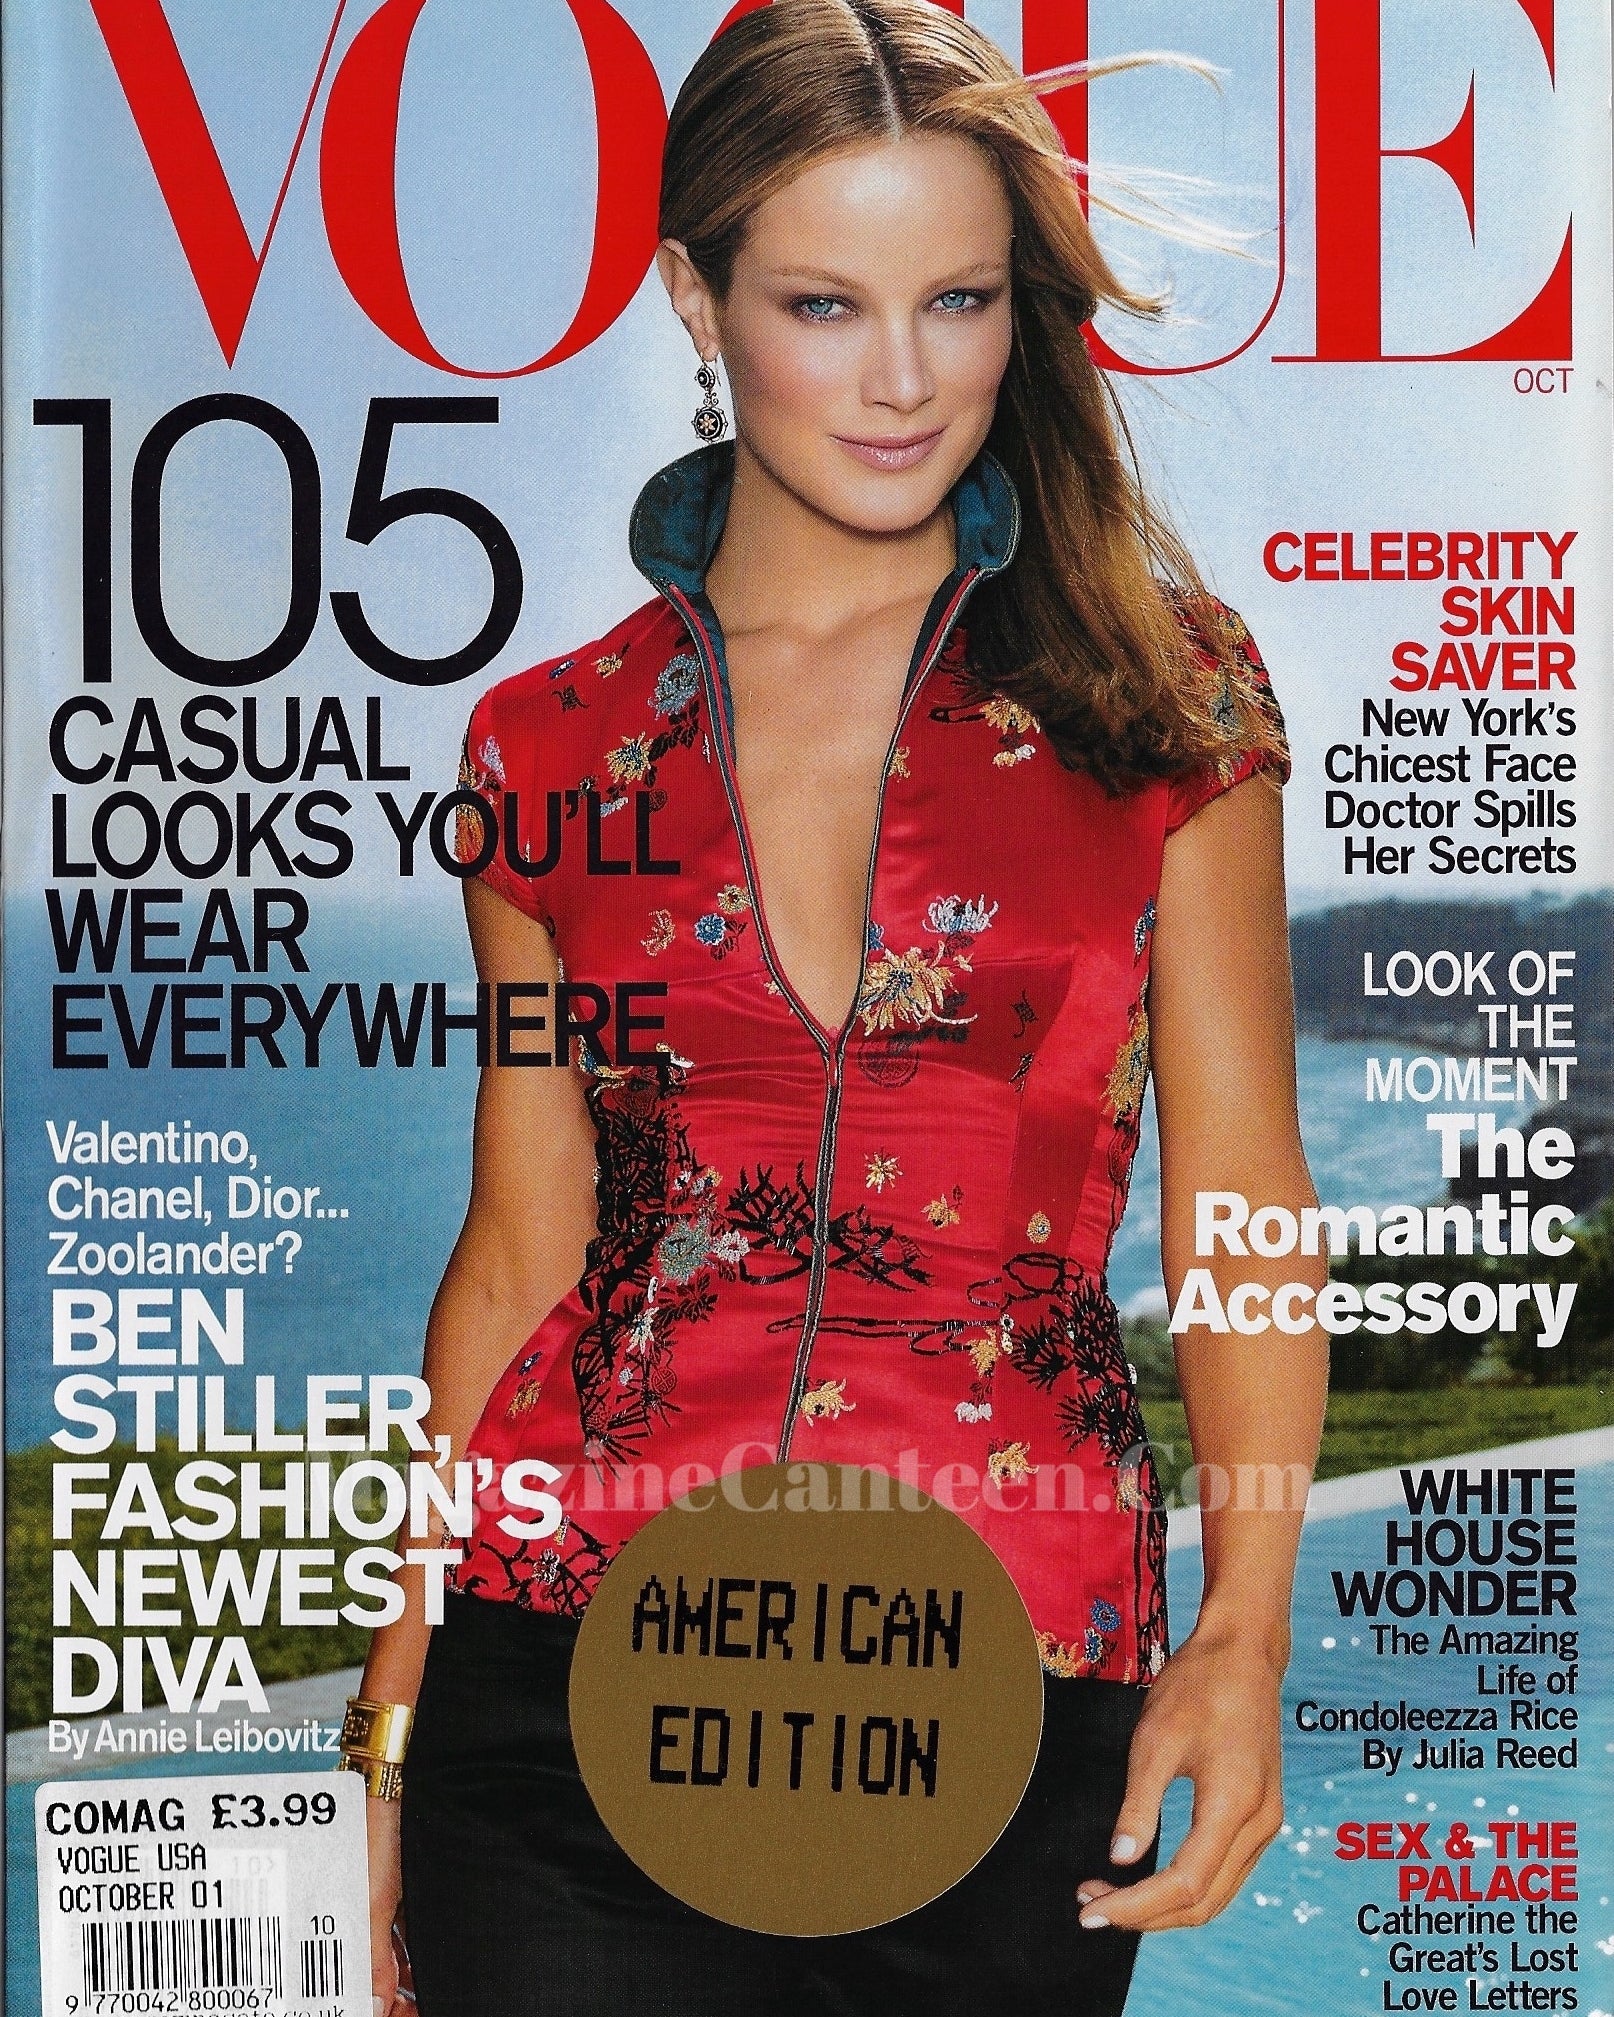 Vogue USA Magazine October 2001 - Carolyn Murphy